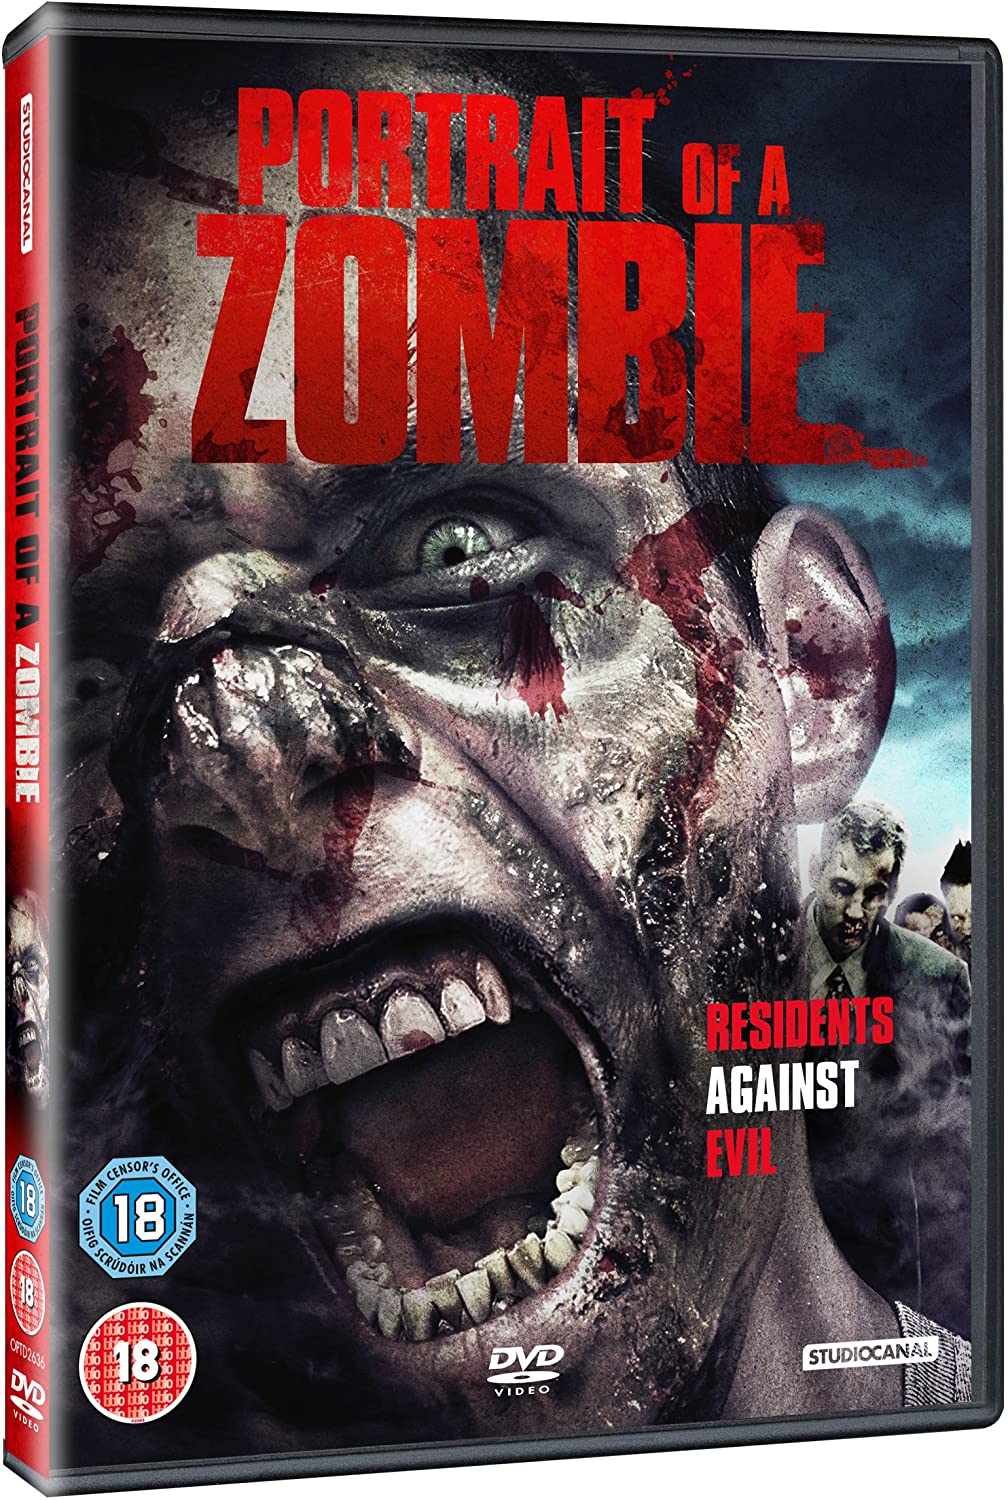 Portrait Of A Zombie - Horror/Drama [DVD]